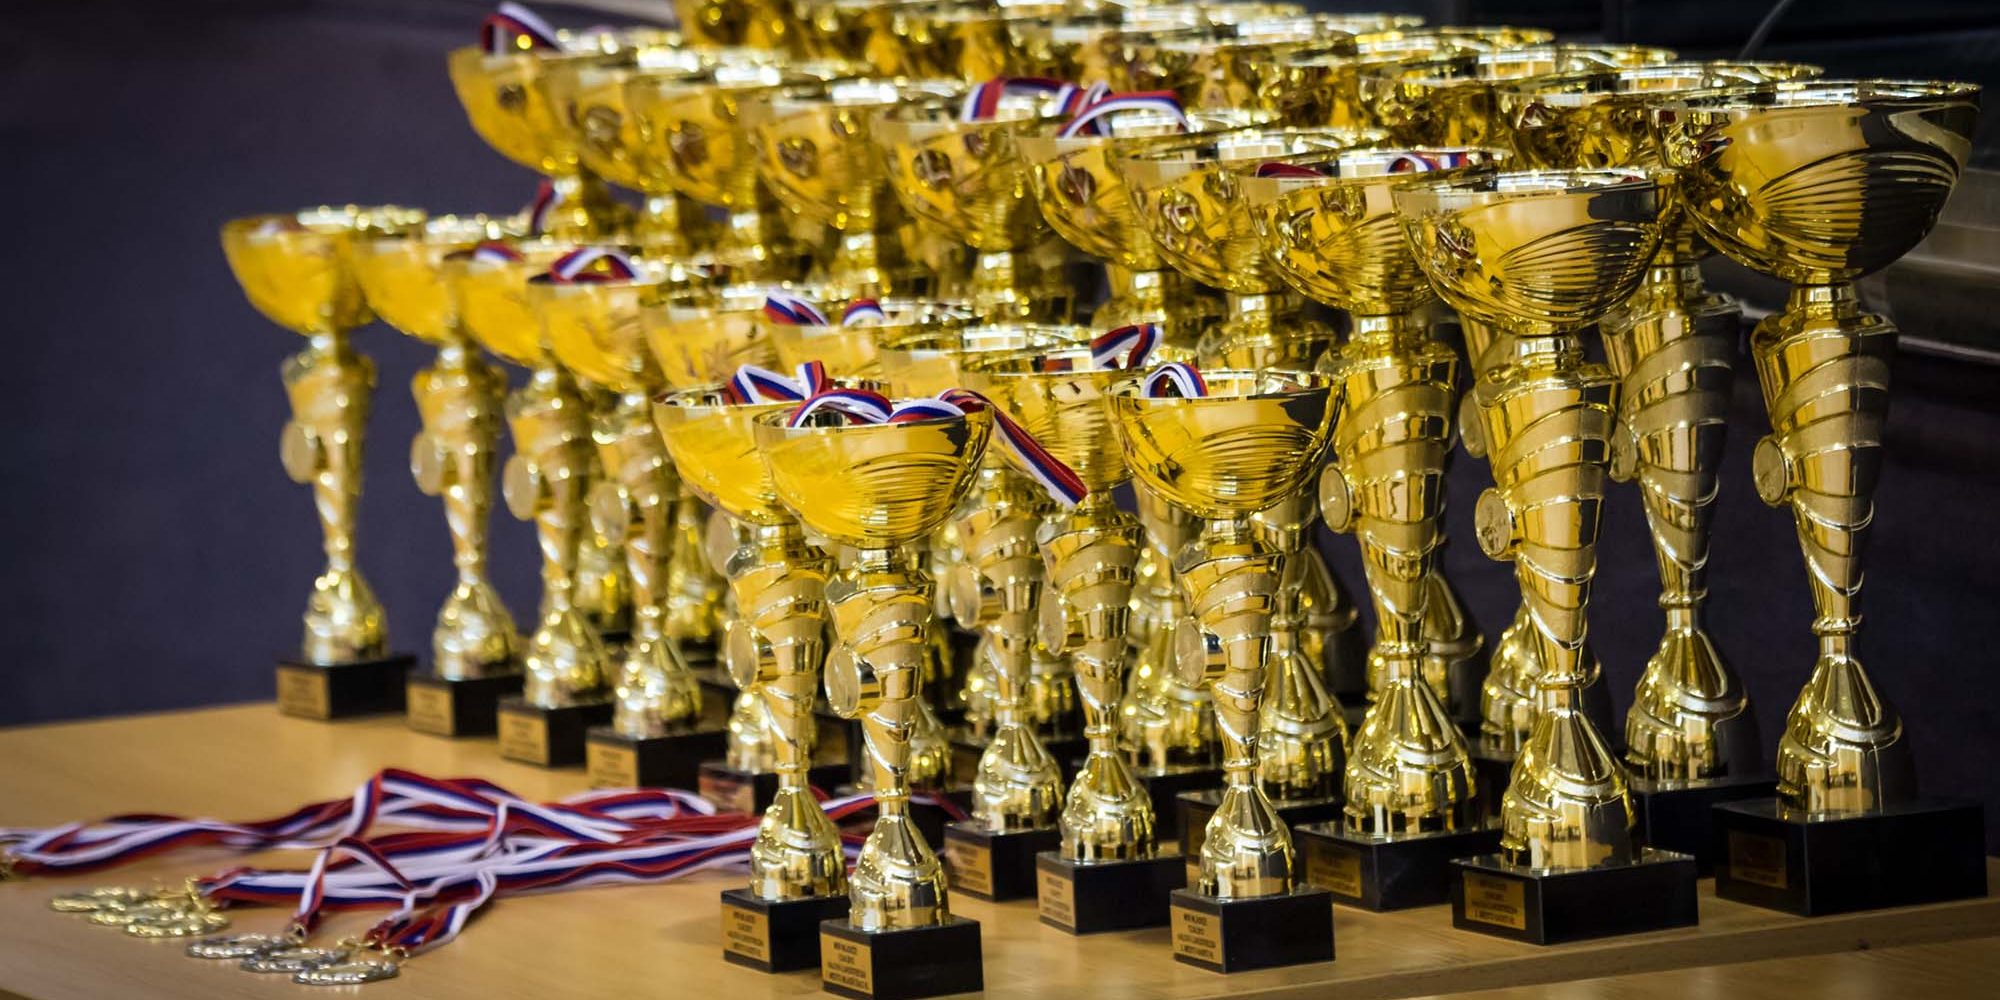 Row of trophies